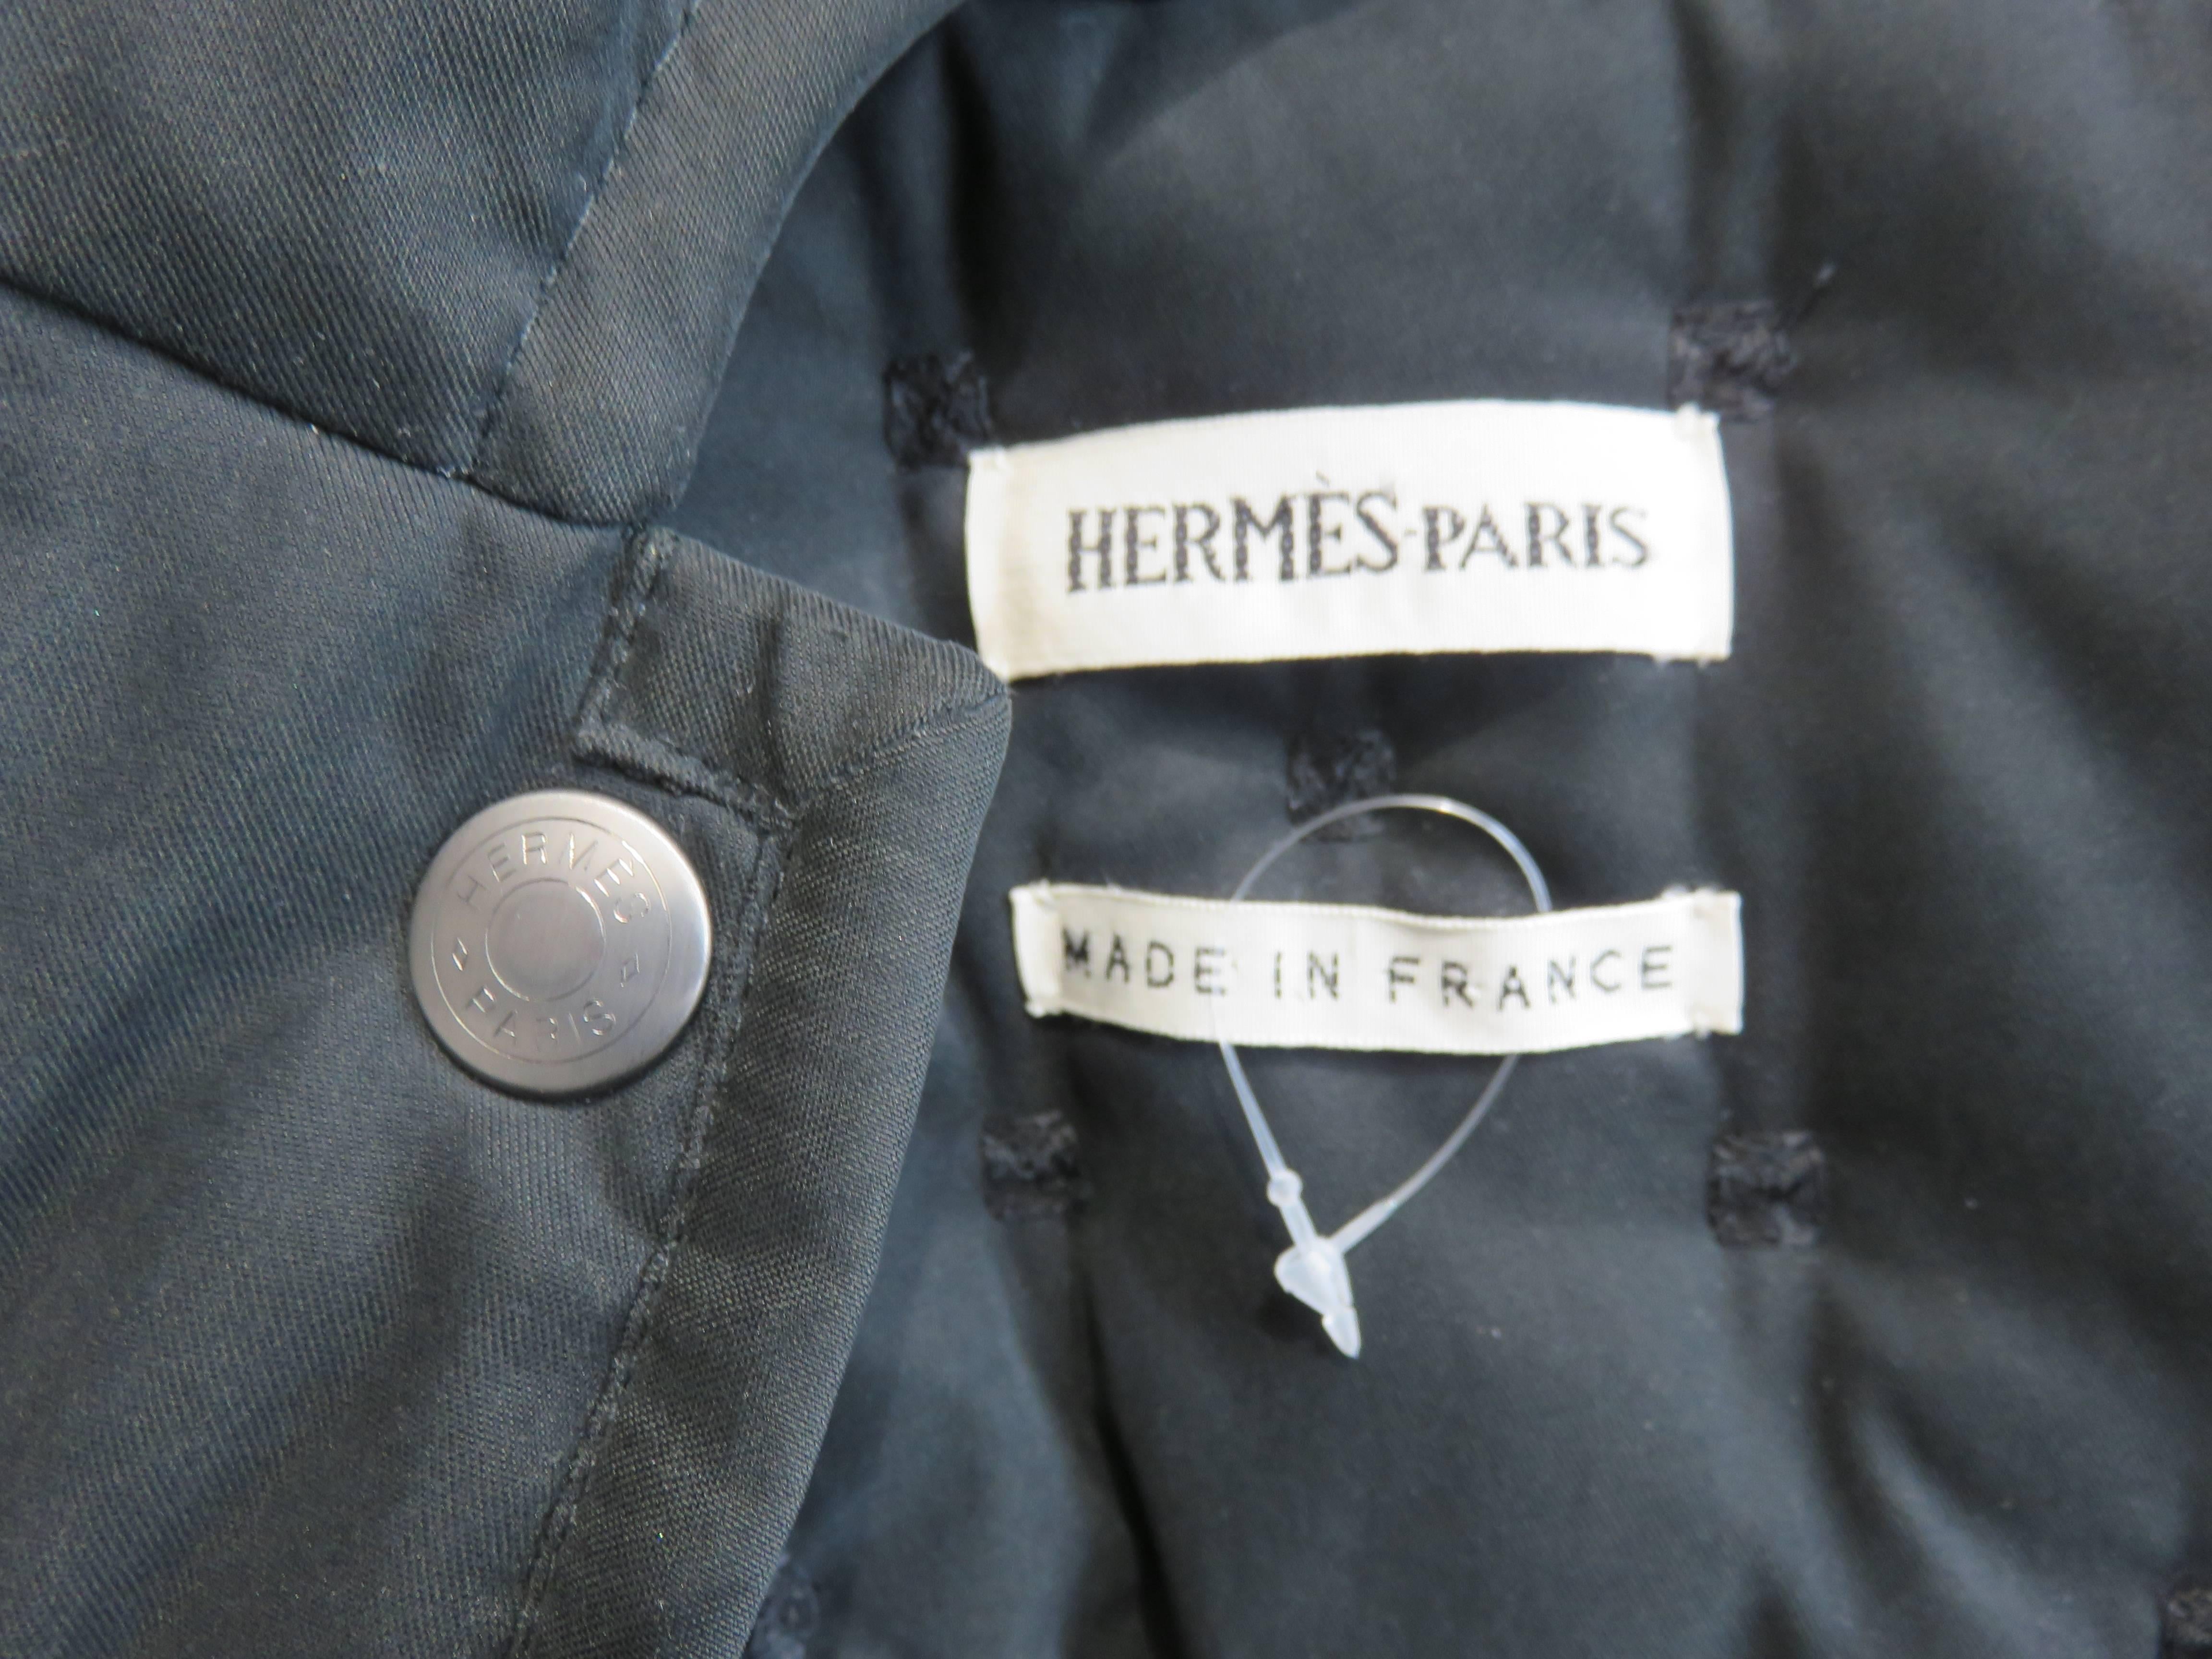 HERMES PARIS Tufted embroidery car coat 5